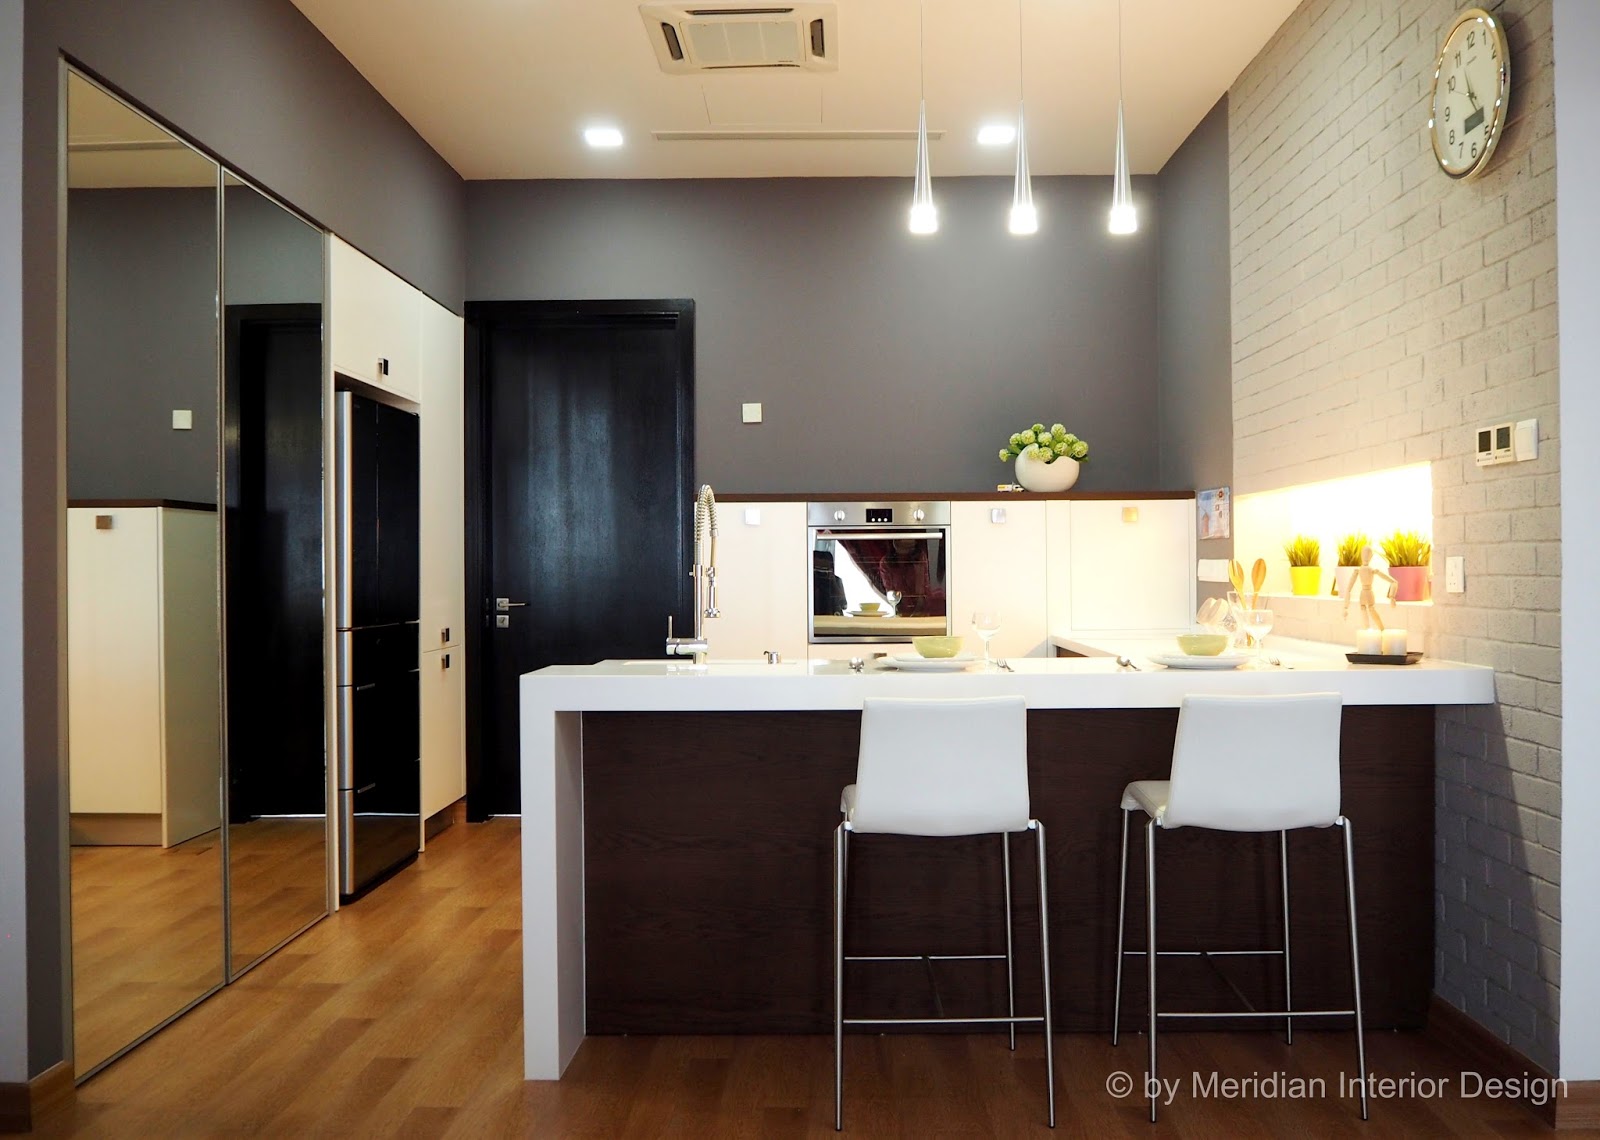 Meridian - Interior Design and Kitchen Design, in Kuala Lumpur